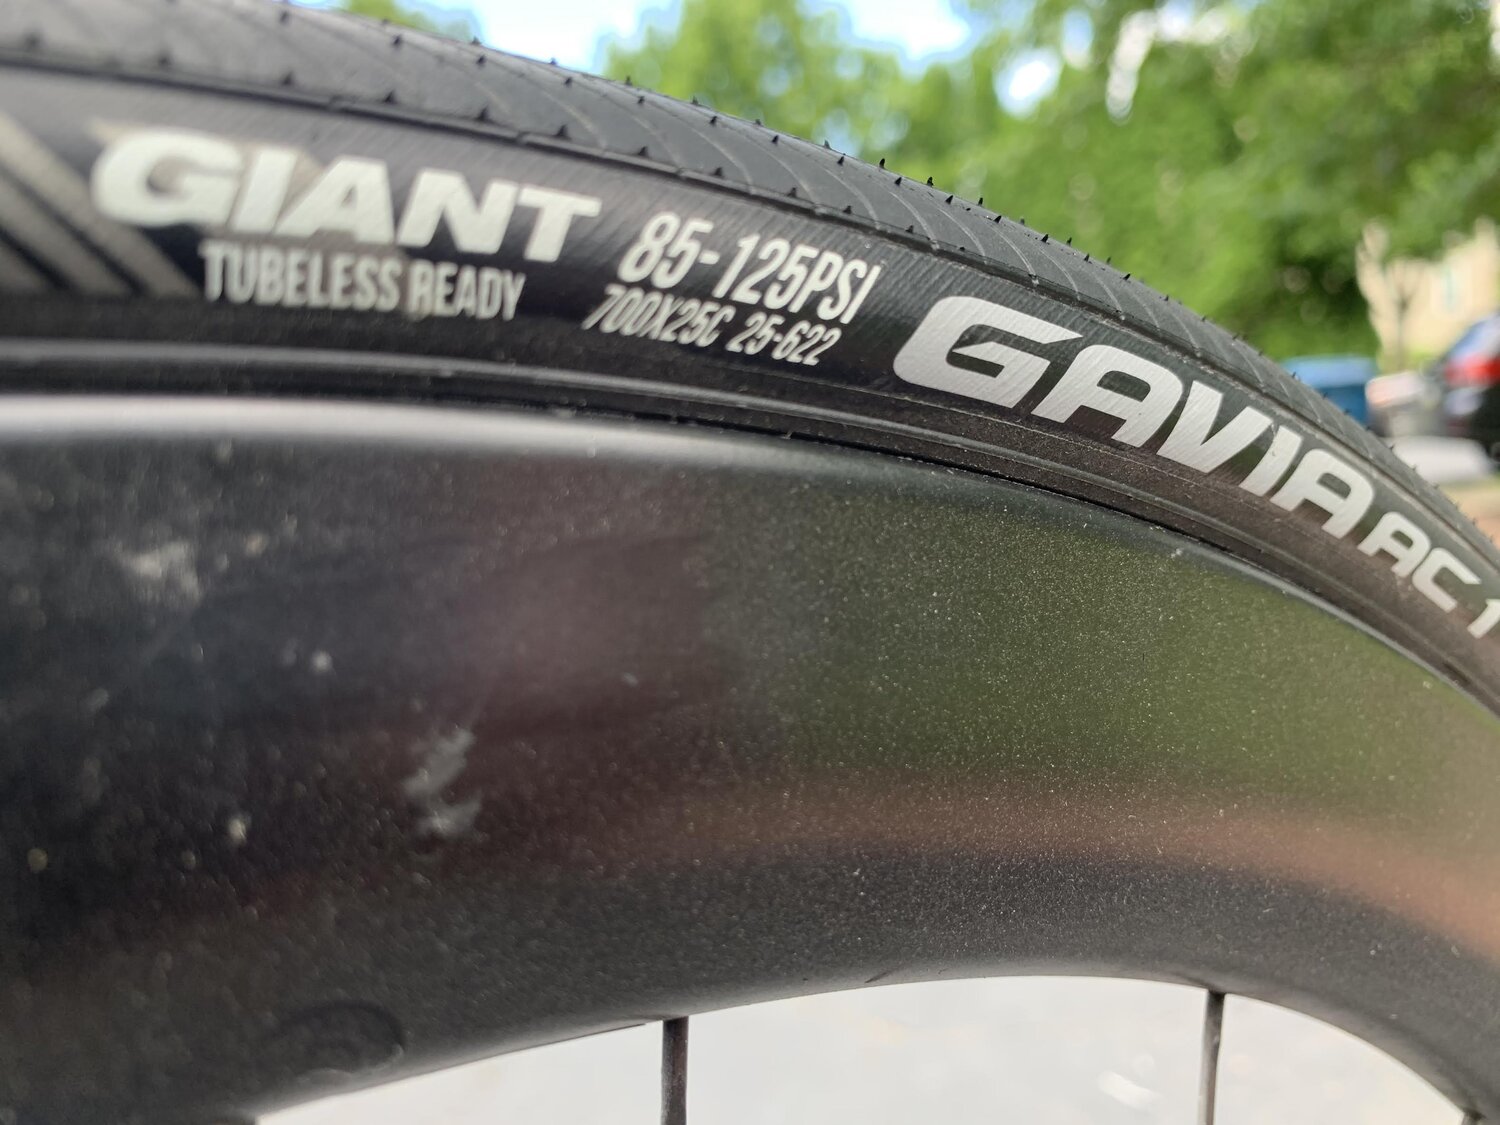 Review: Giant Gavia AC 1 Tire — Creaky Bottom Bracket